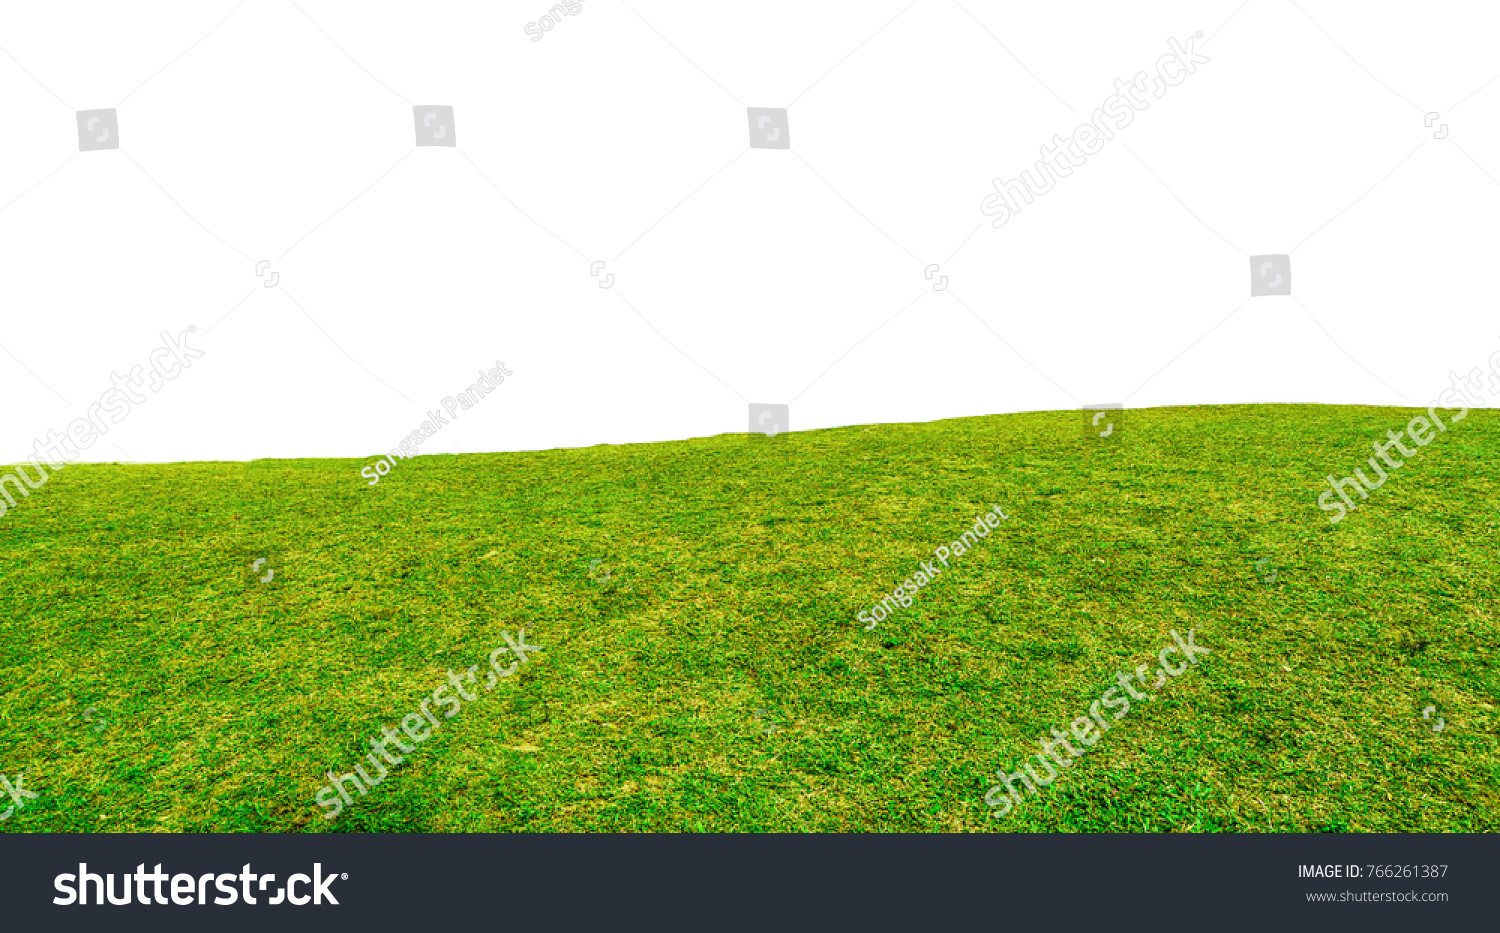 Green Grass Field On White Background Stock Photo 766261387 | Shutterstock